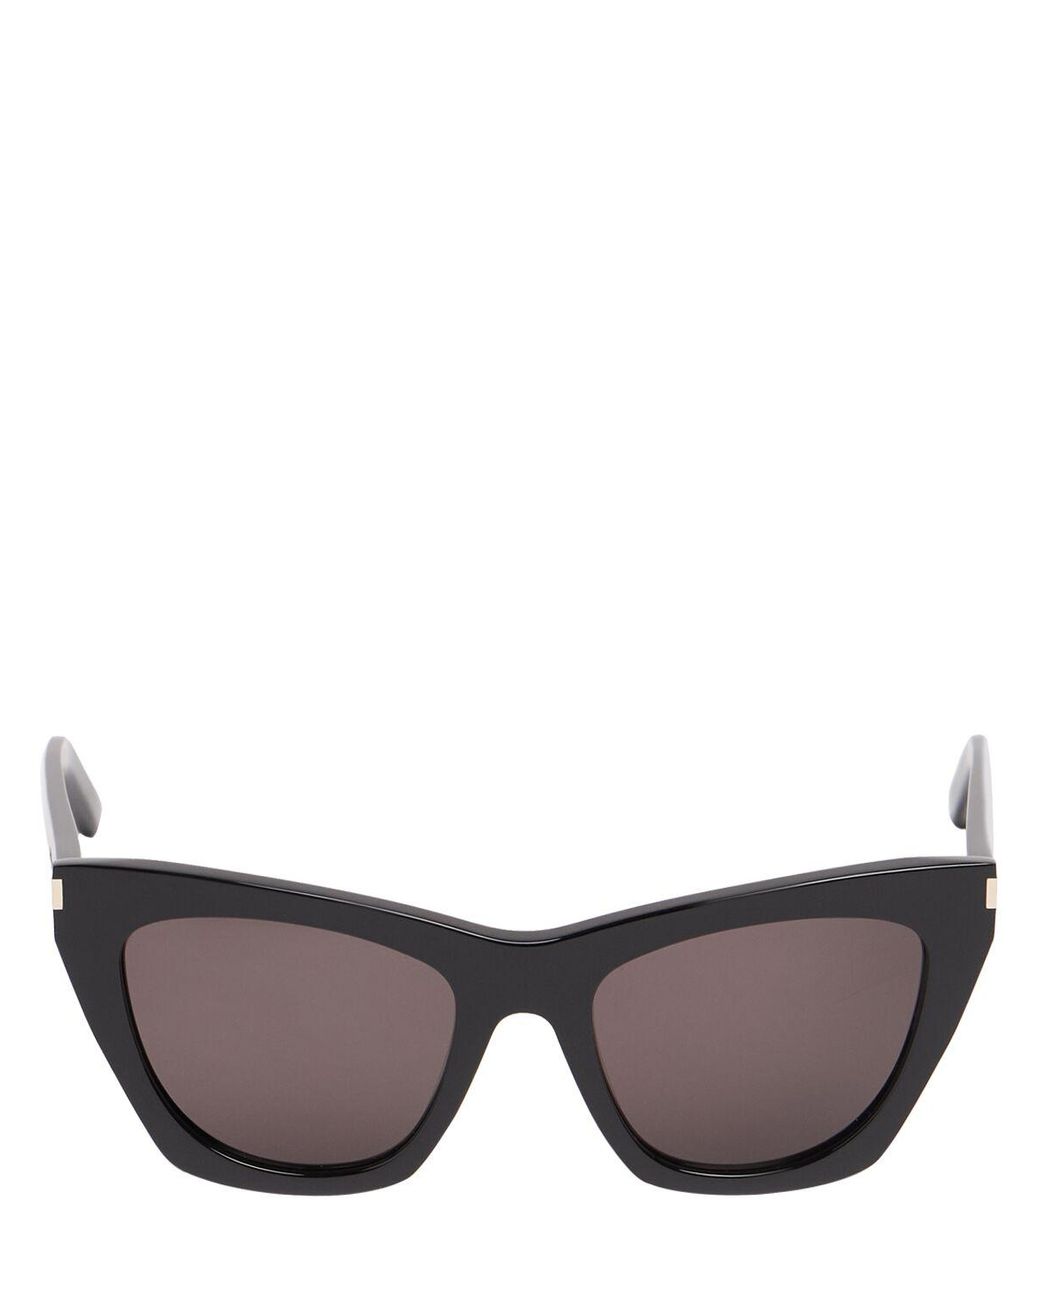 Saint Laurent SL 1 Slim Sunglasses Black & Grey | END. (IT)